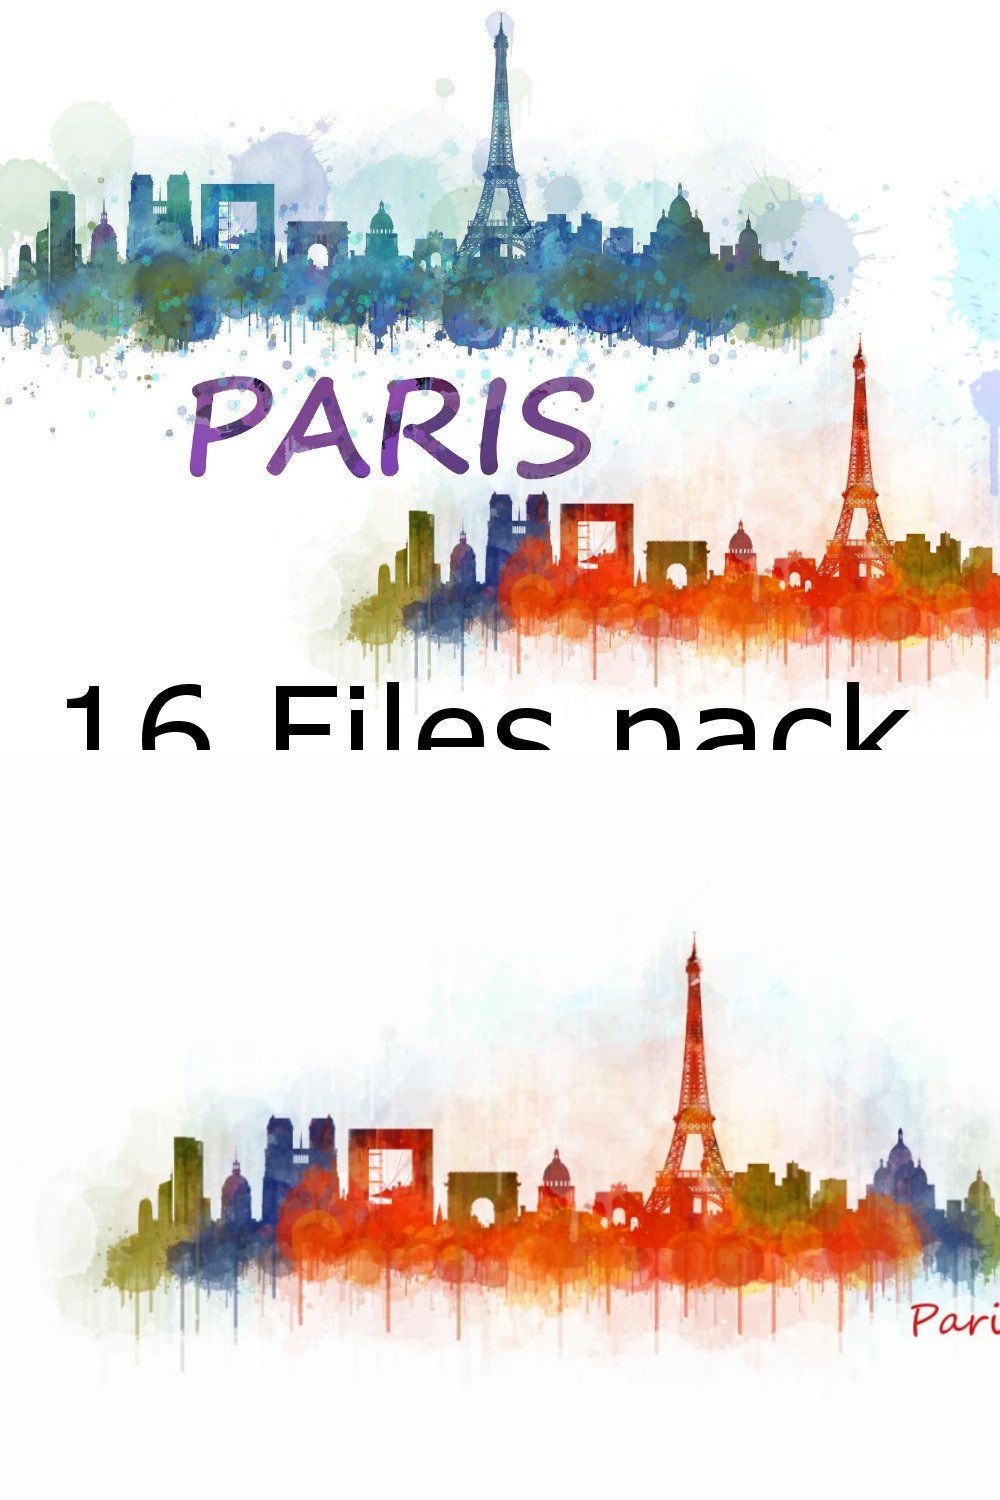 16xFiles Pack Paris France Skylines pinterest preview image.